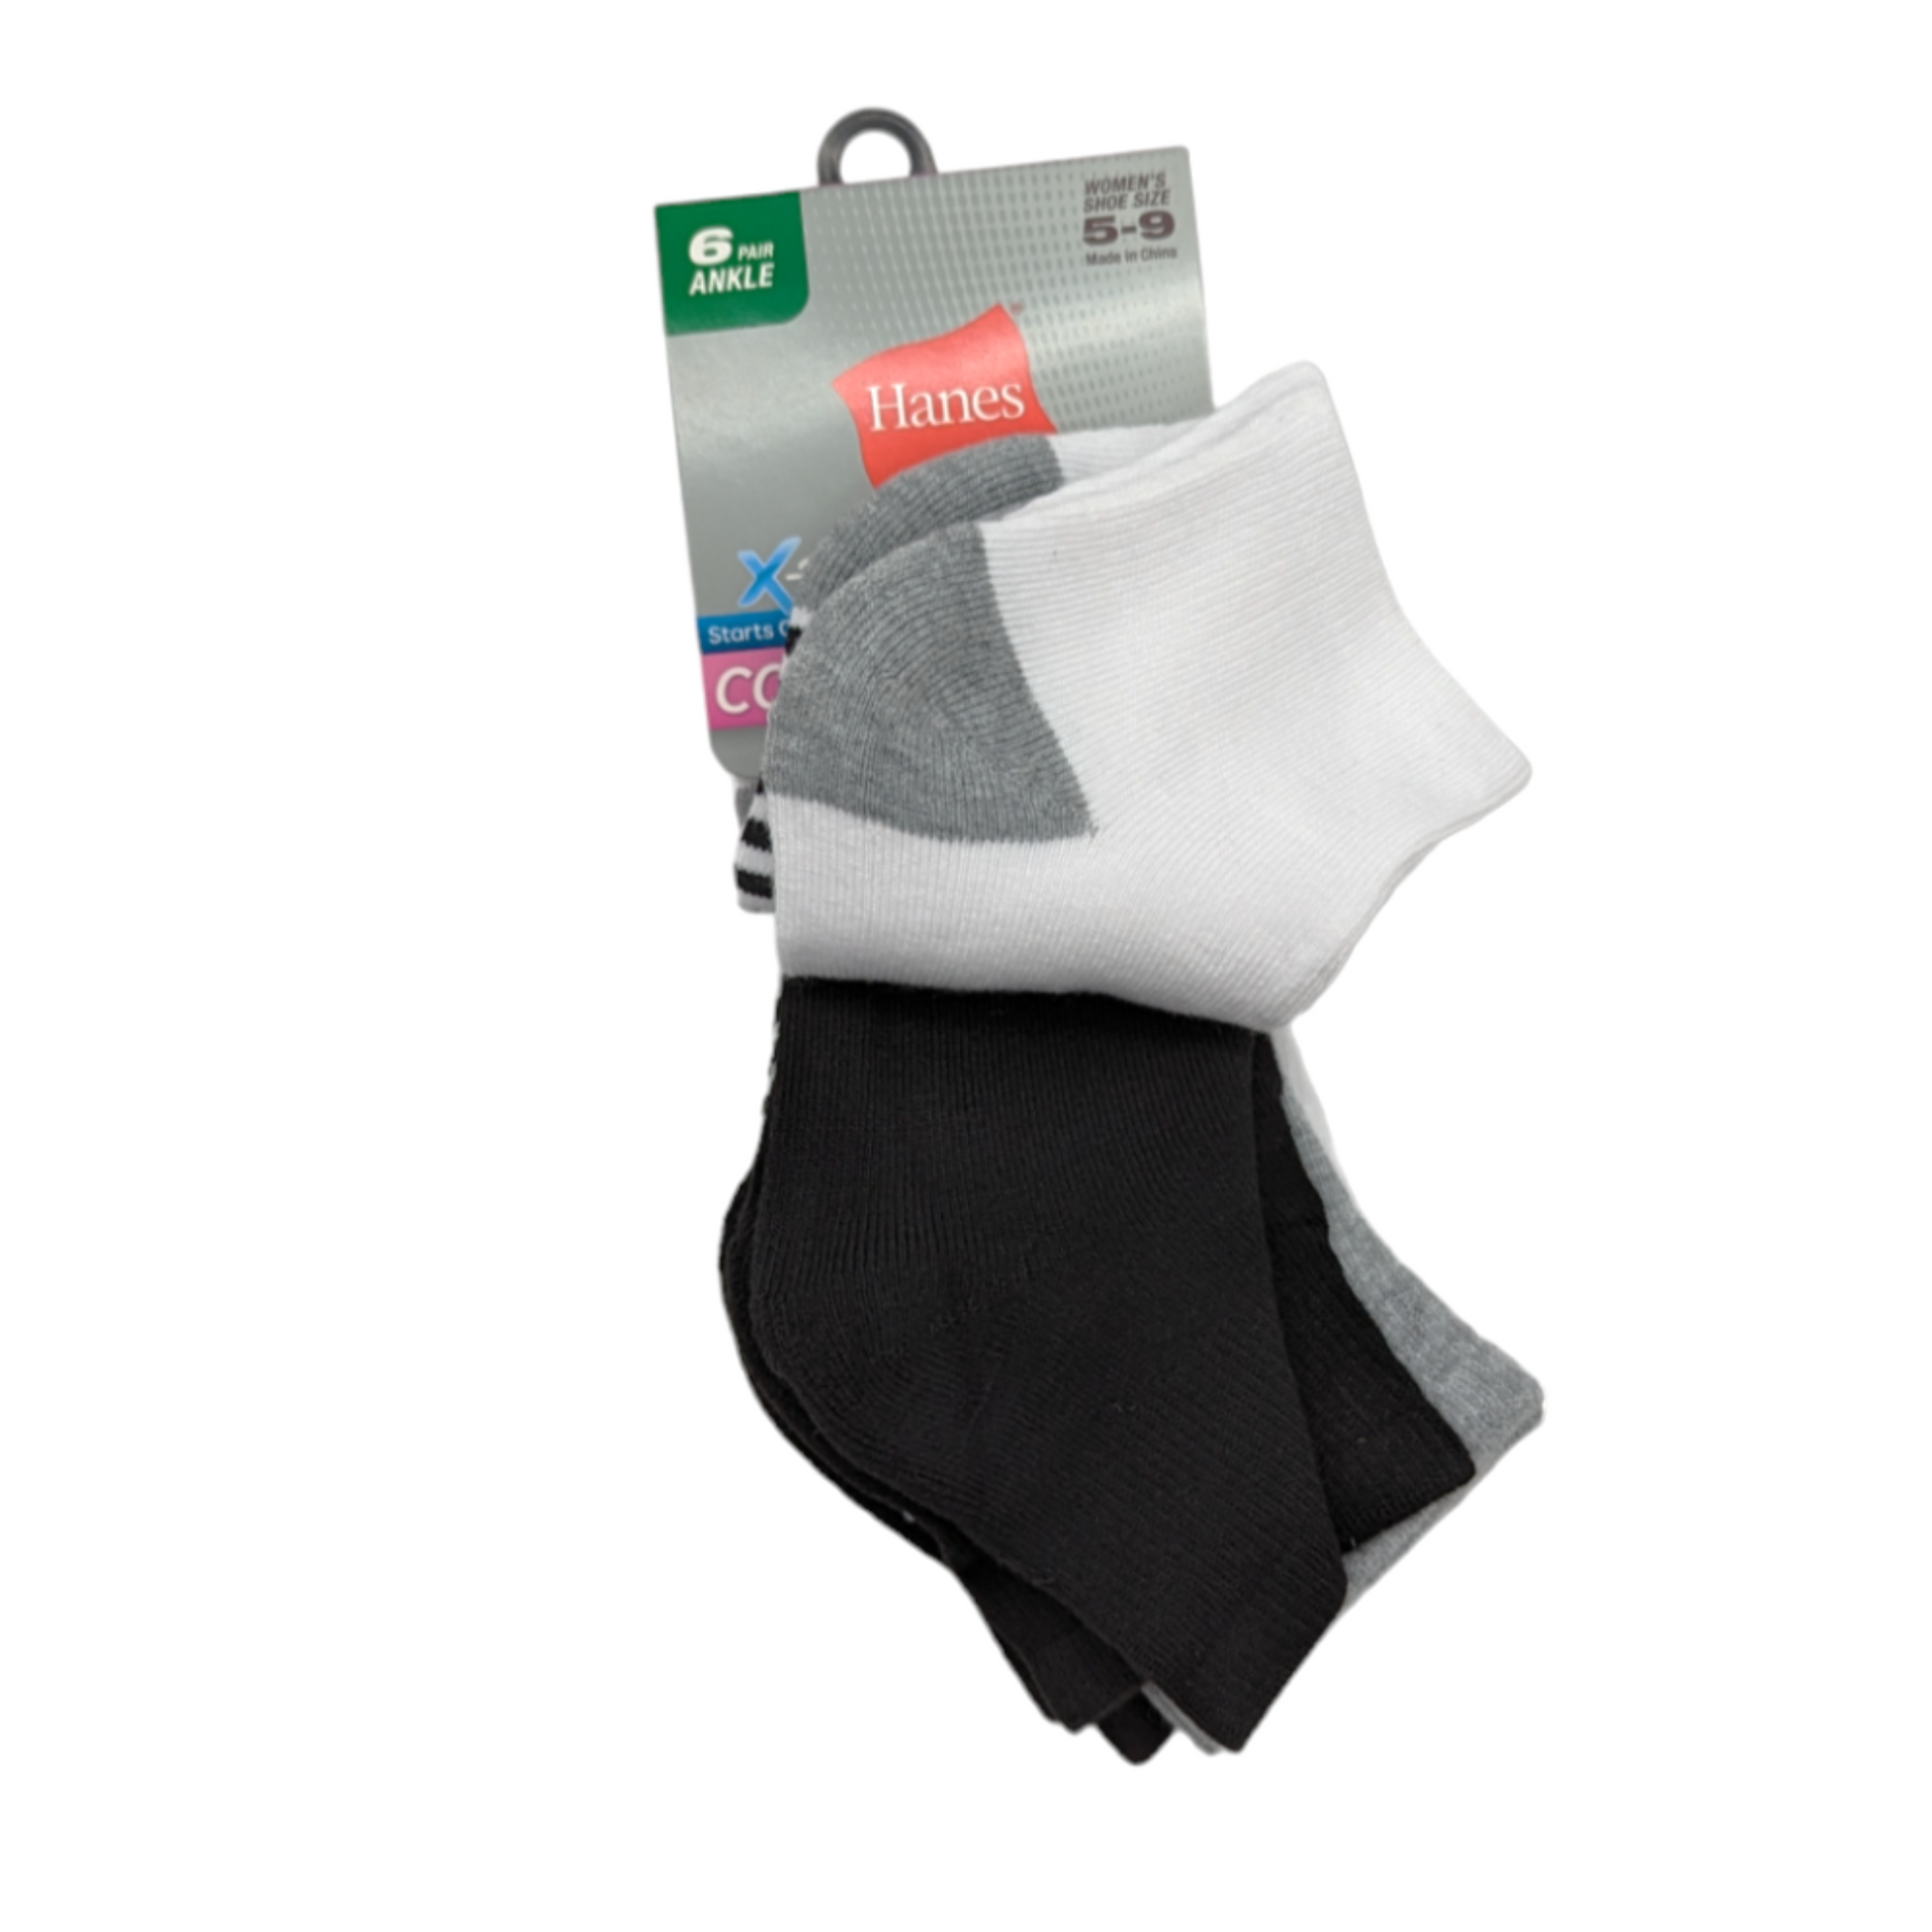 Black, White and Grey socks